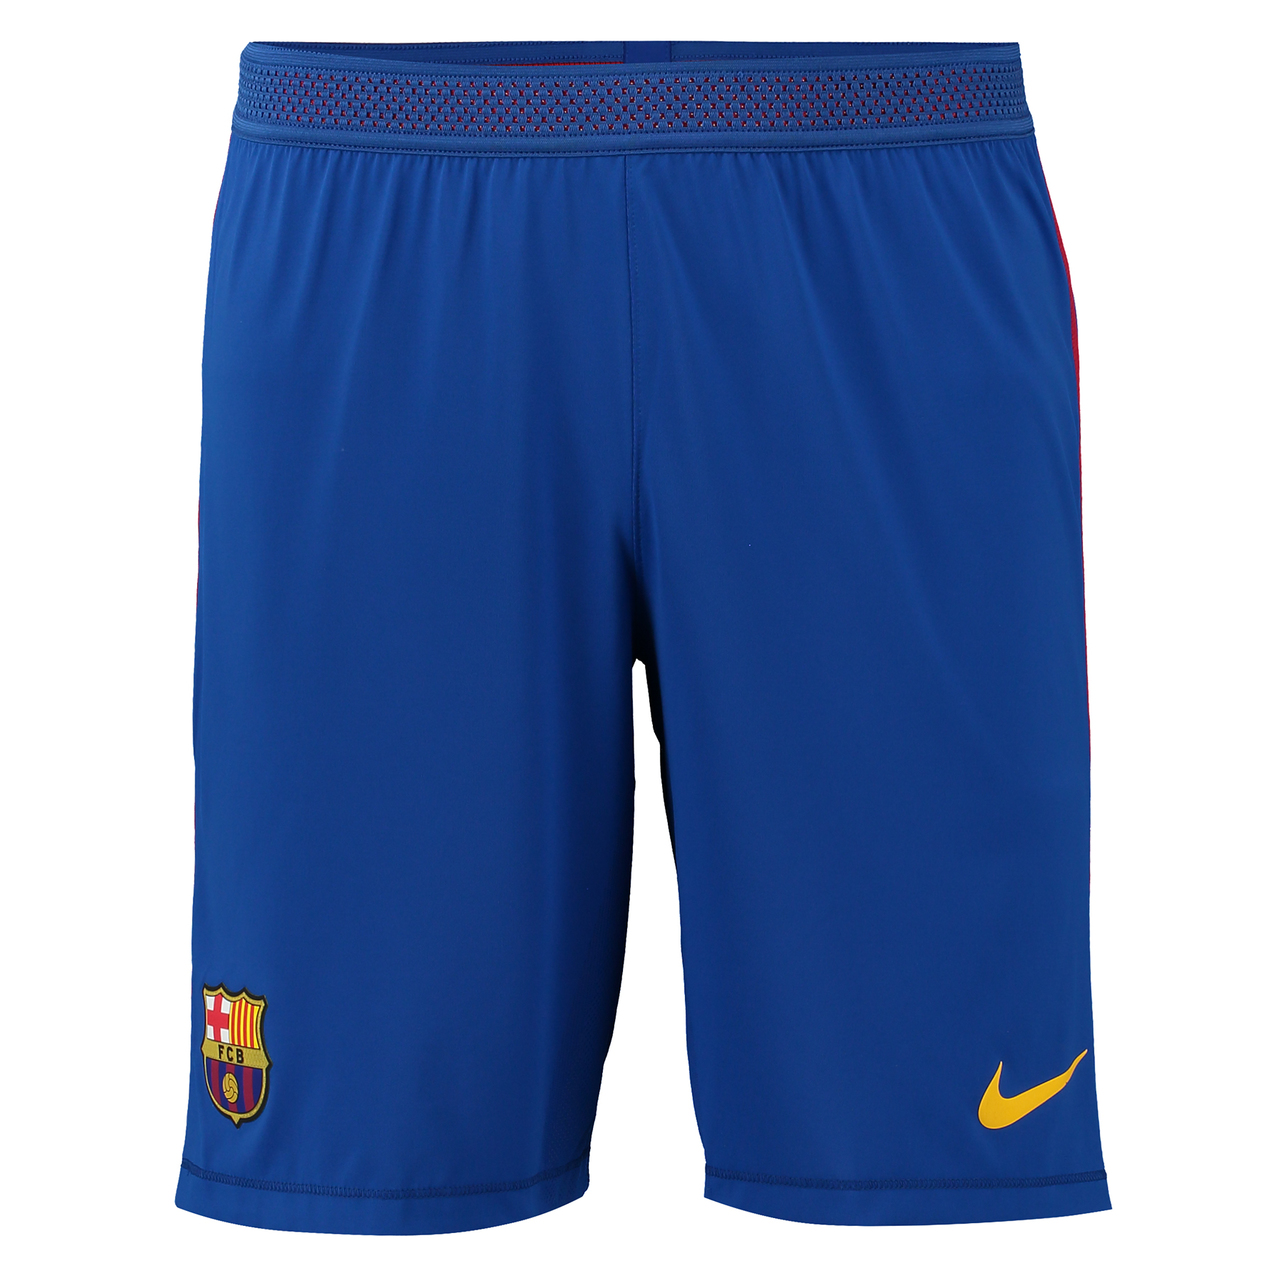 Barcelona 16/17 Nike Home Kit - Football Shirt Culture - Latest ...